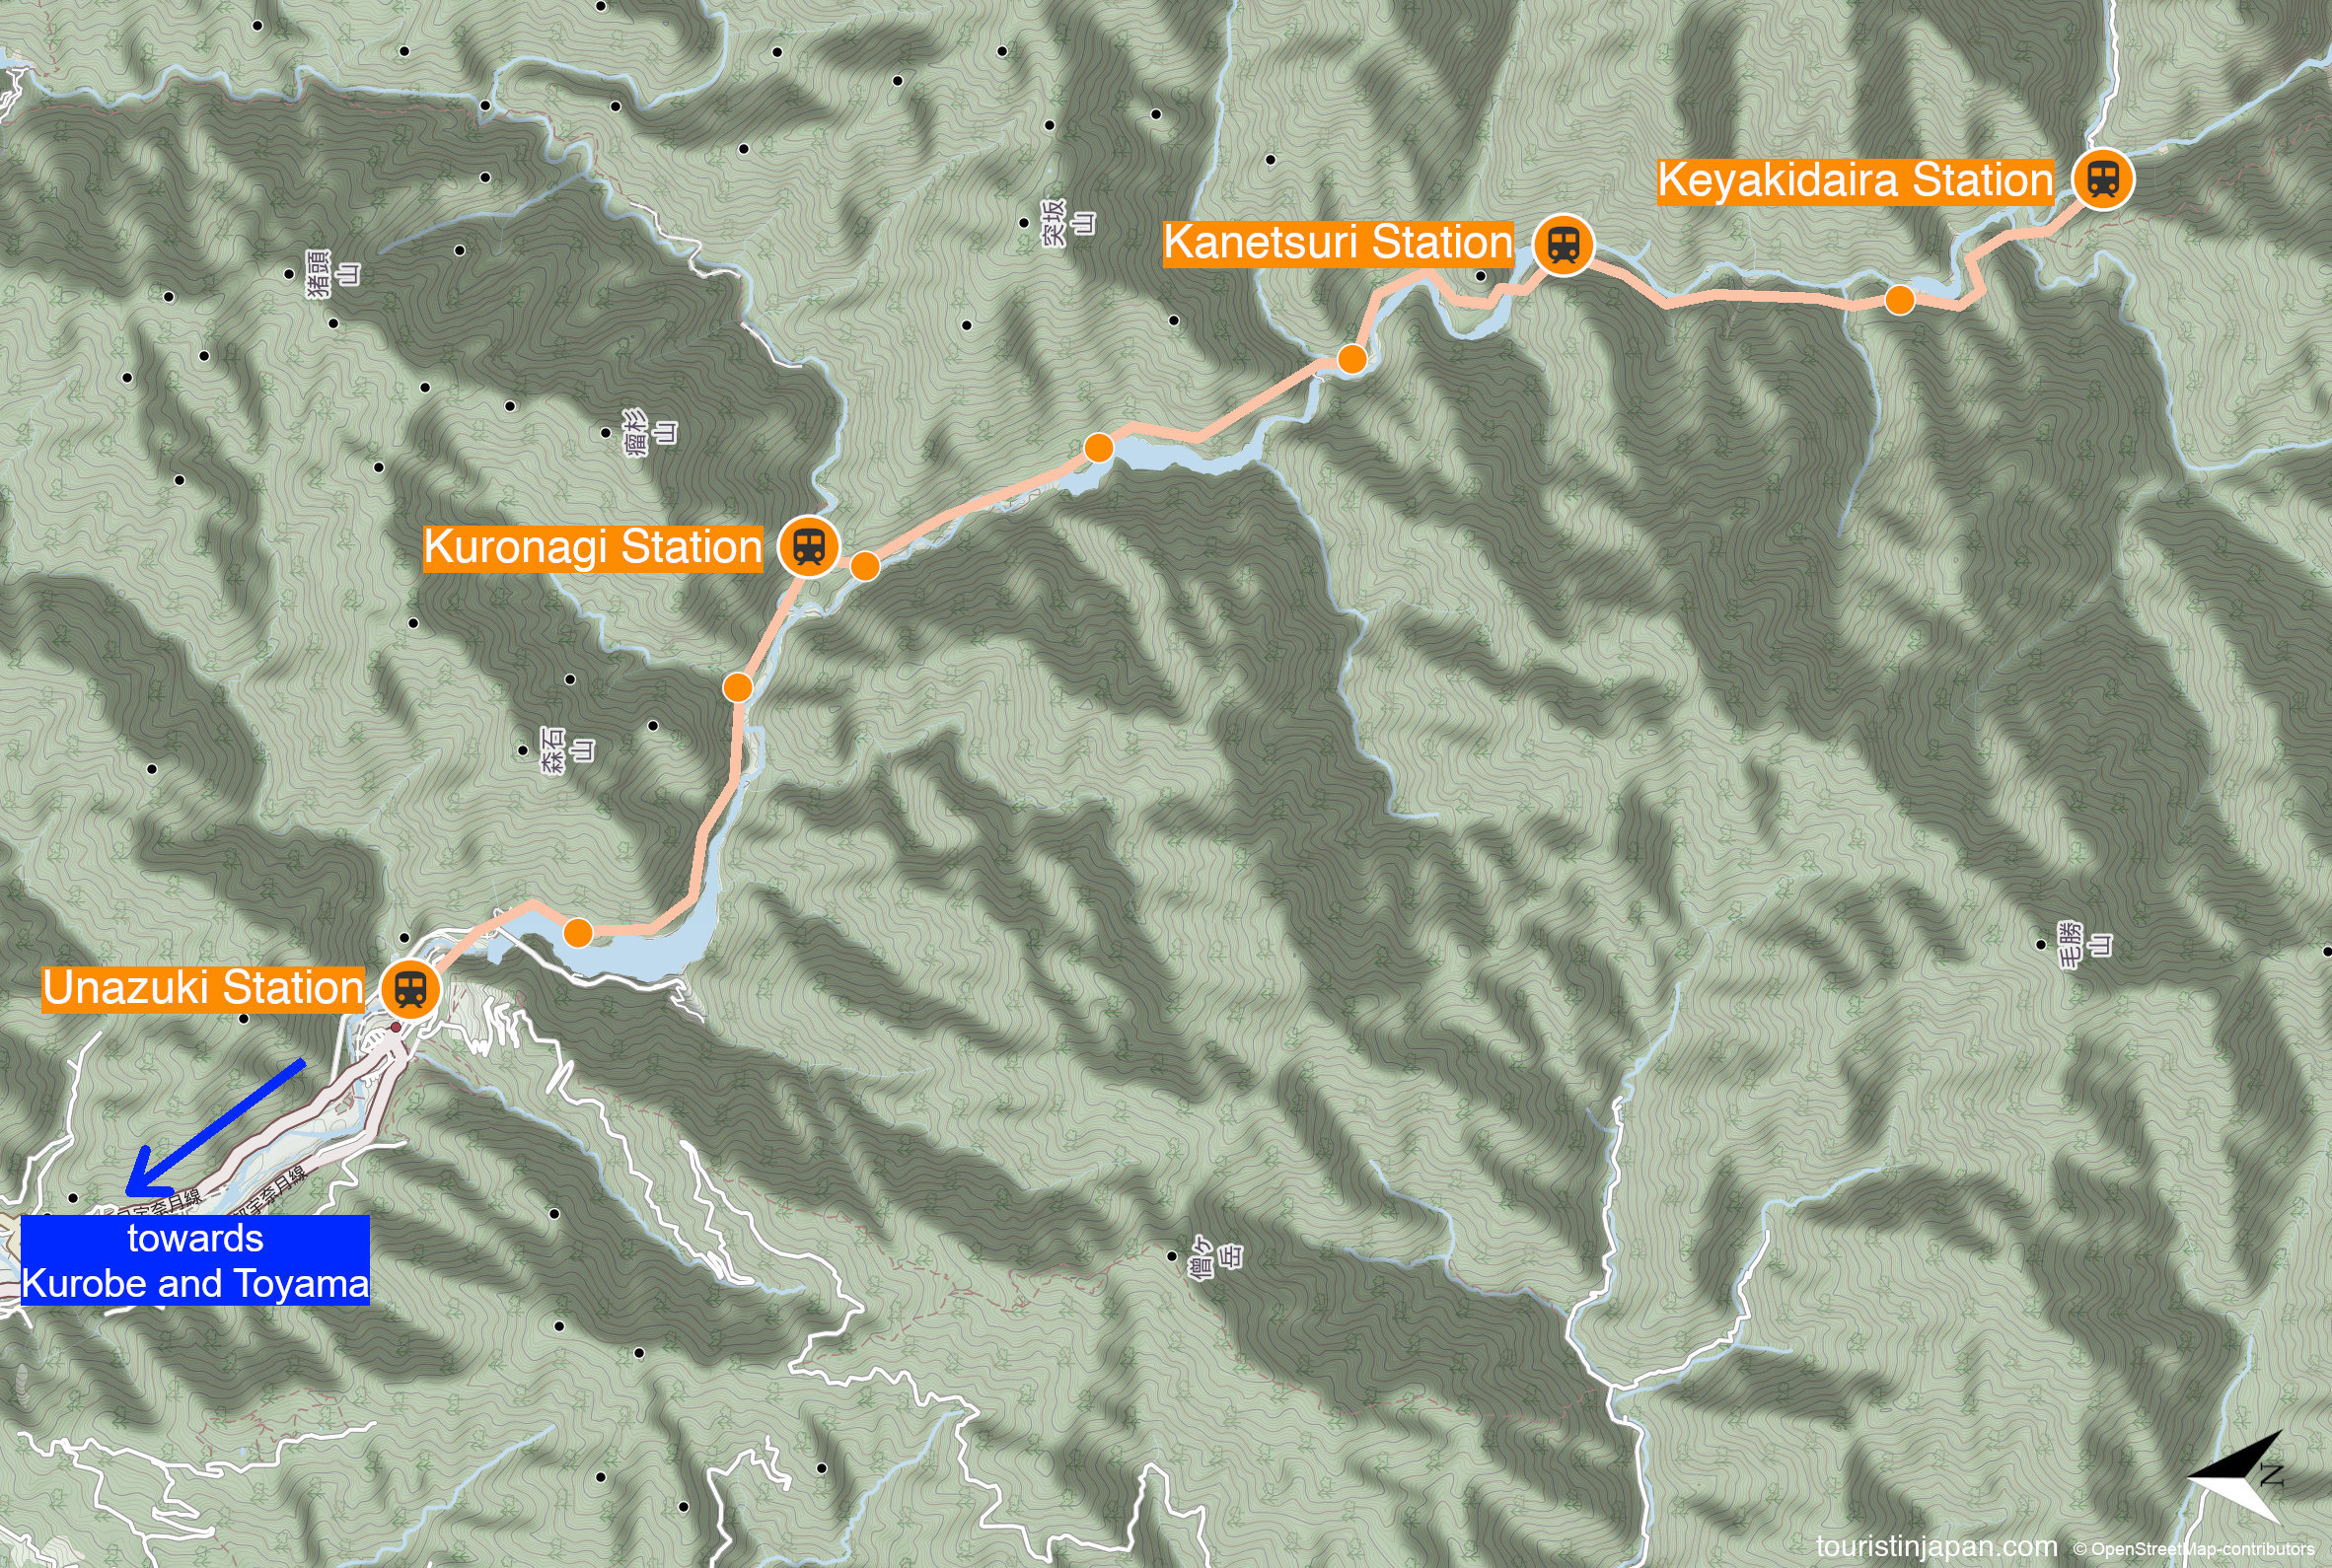 Map of Kurobe Gorge Railway. © openstreetmap-contributors and touristinjapan.com